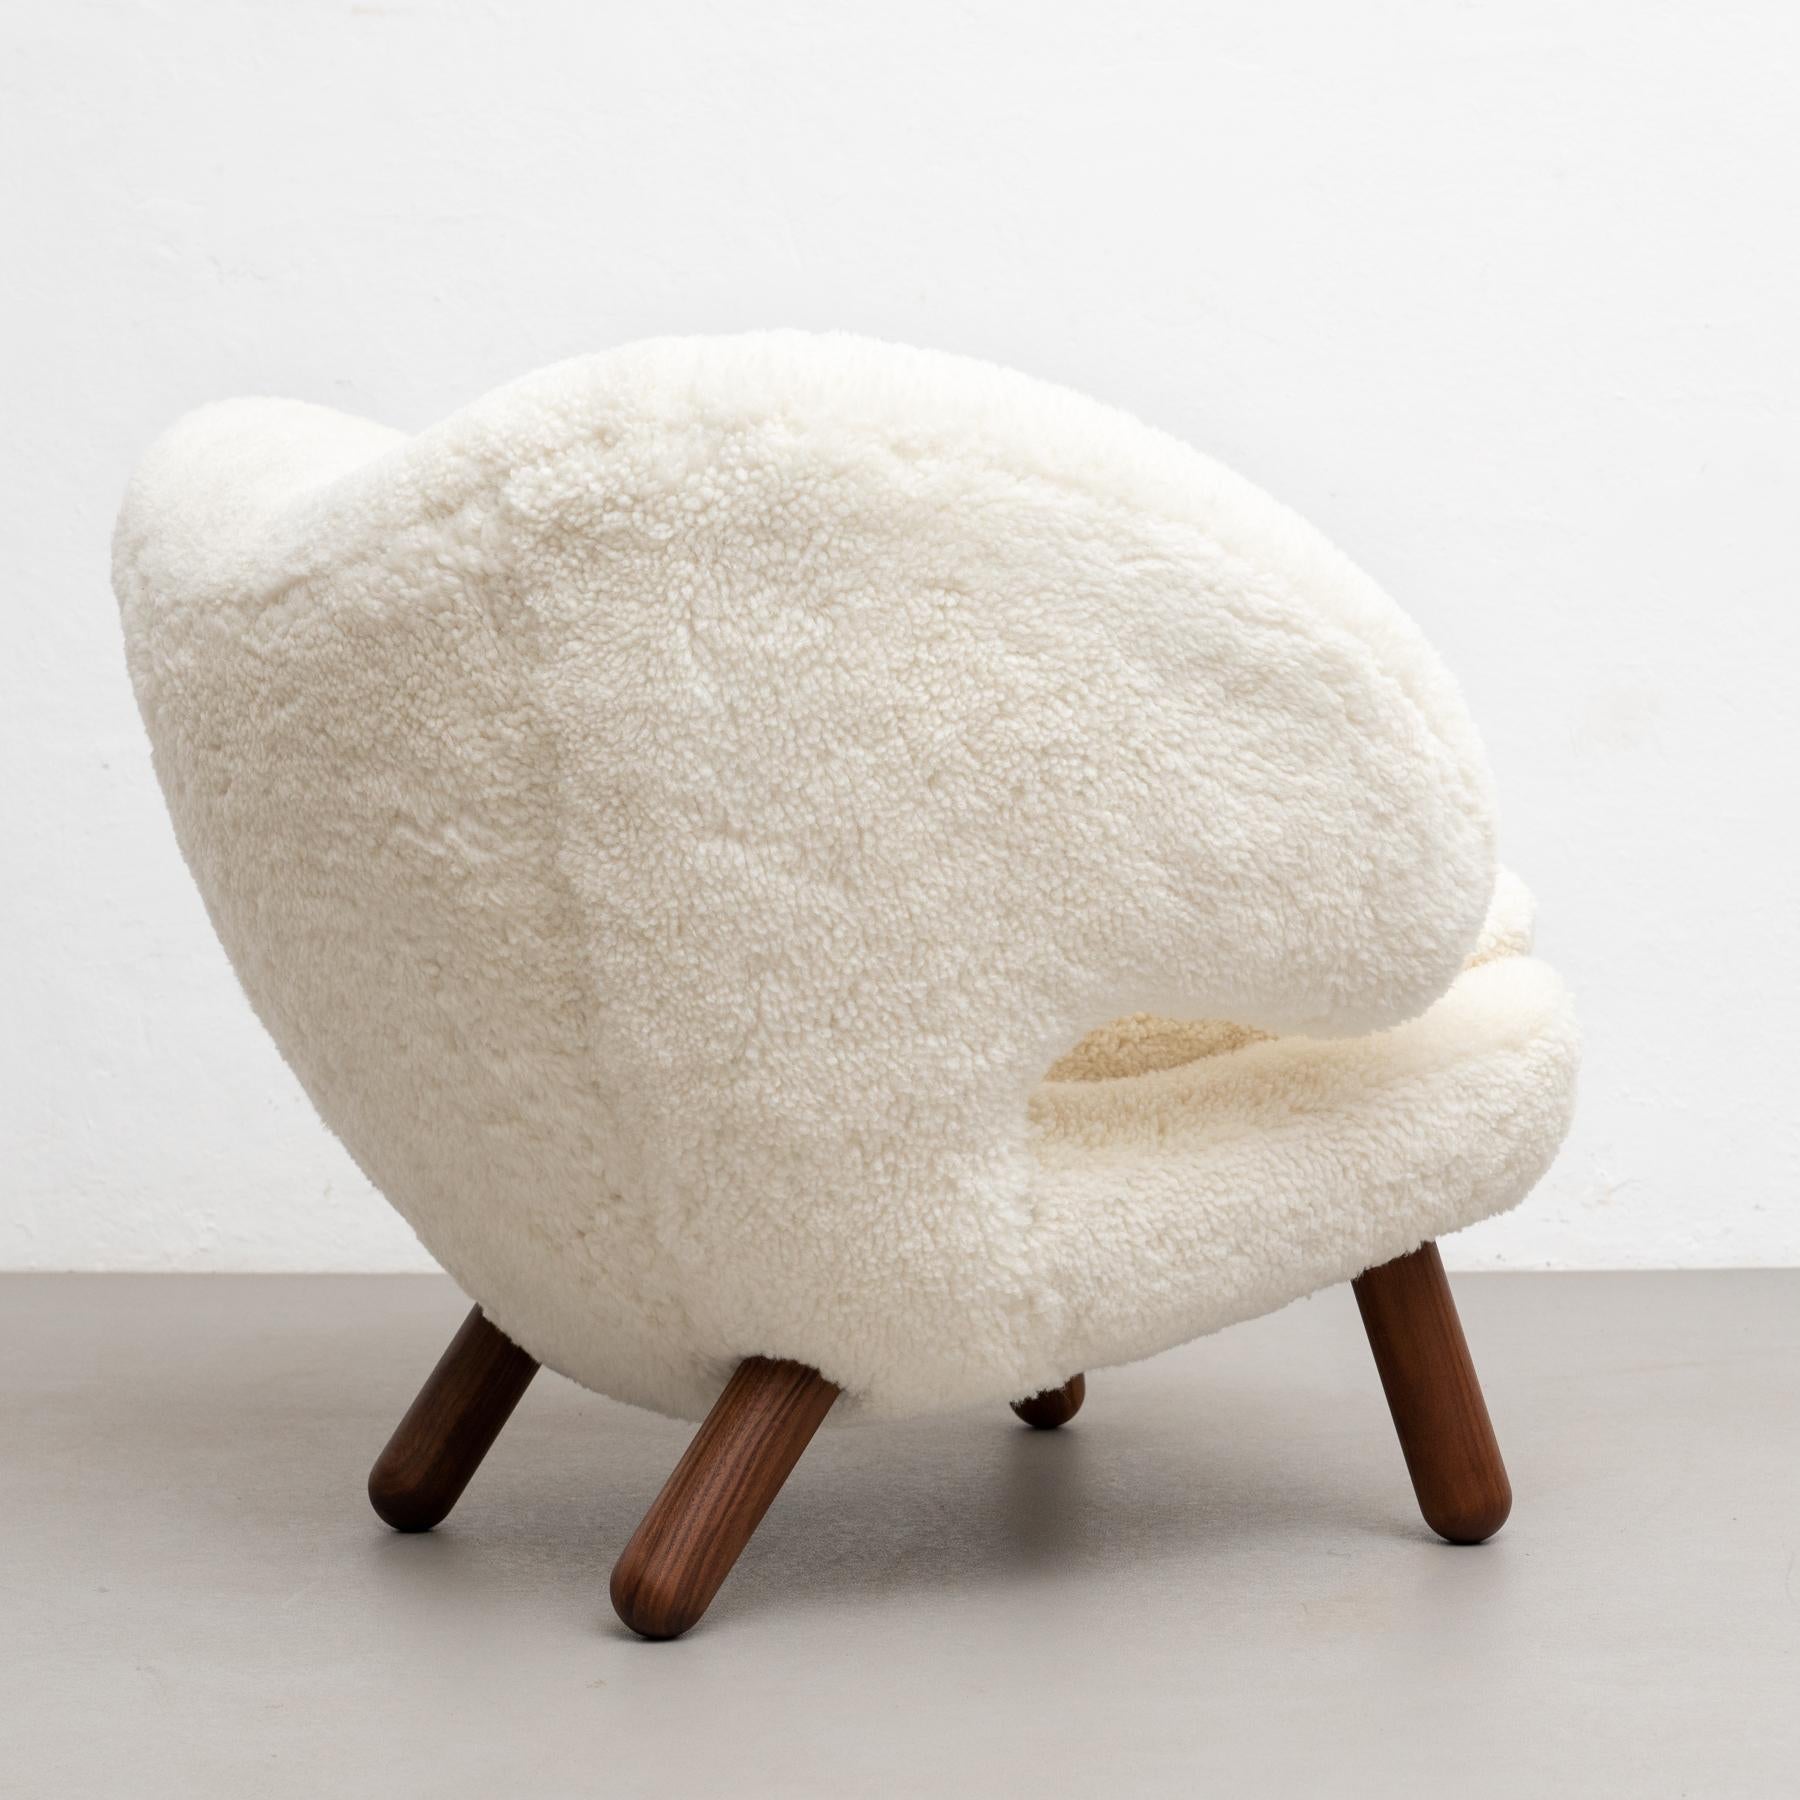 Finn Juhl Pelican Chair Upholstered in Offwhite Sheepskin (Chaise Pélican recouverte de peau de mouton blanc cassé) Neuf - En vente à Barcelona, Barcelona